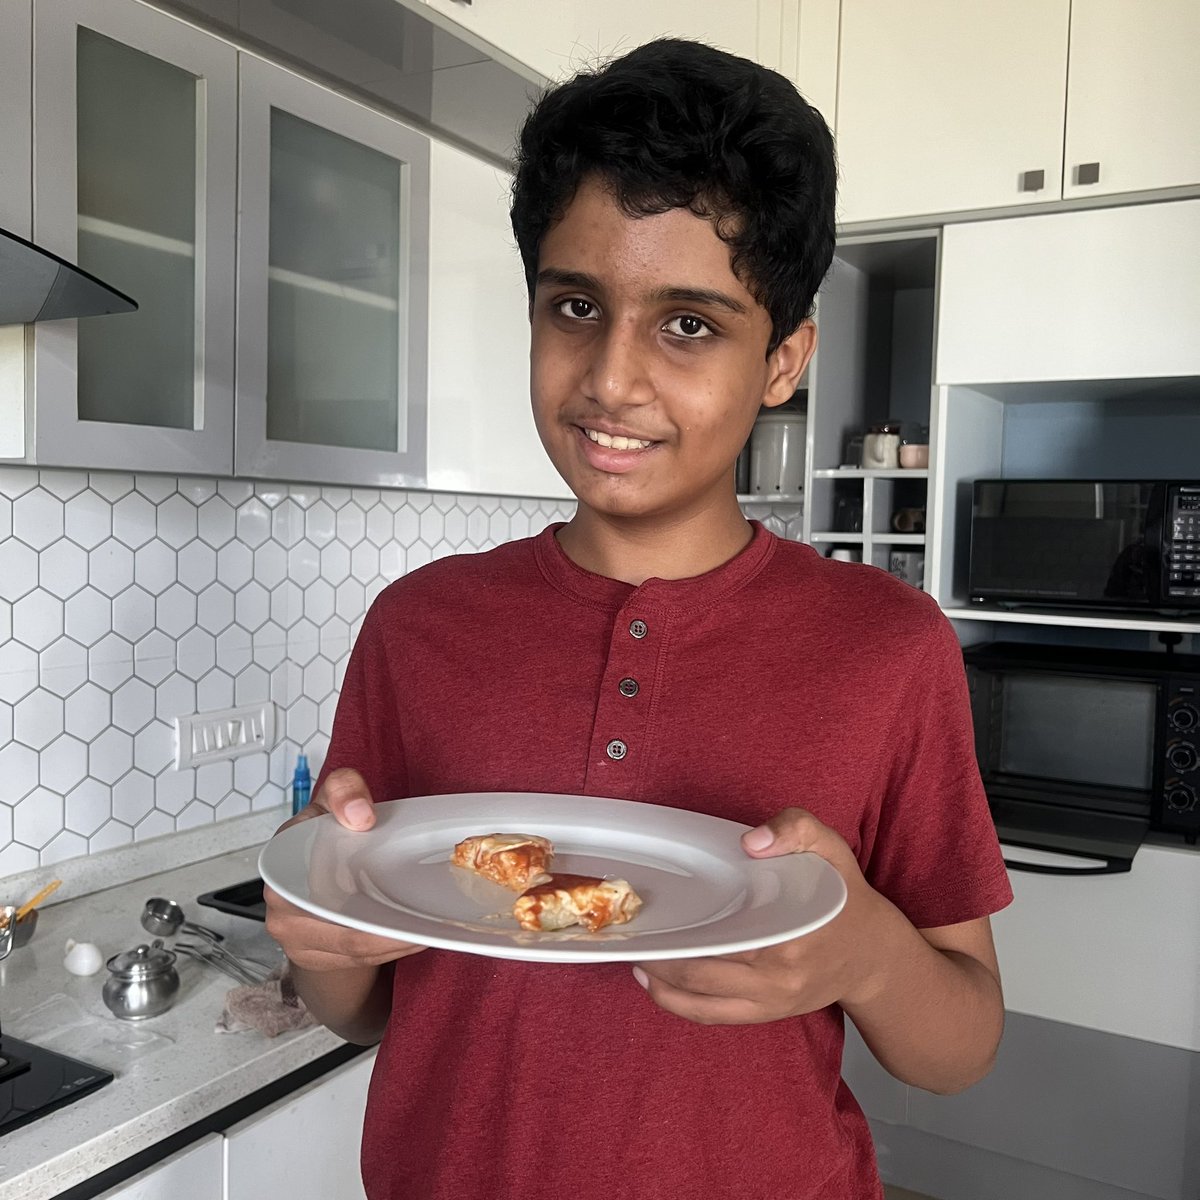 Rice crust pizza

#wonderfud #autism #kidchef